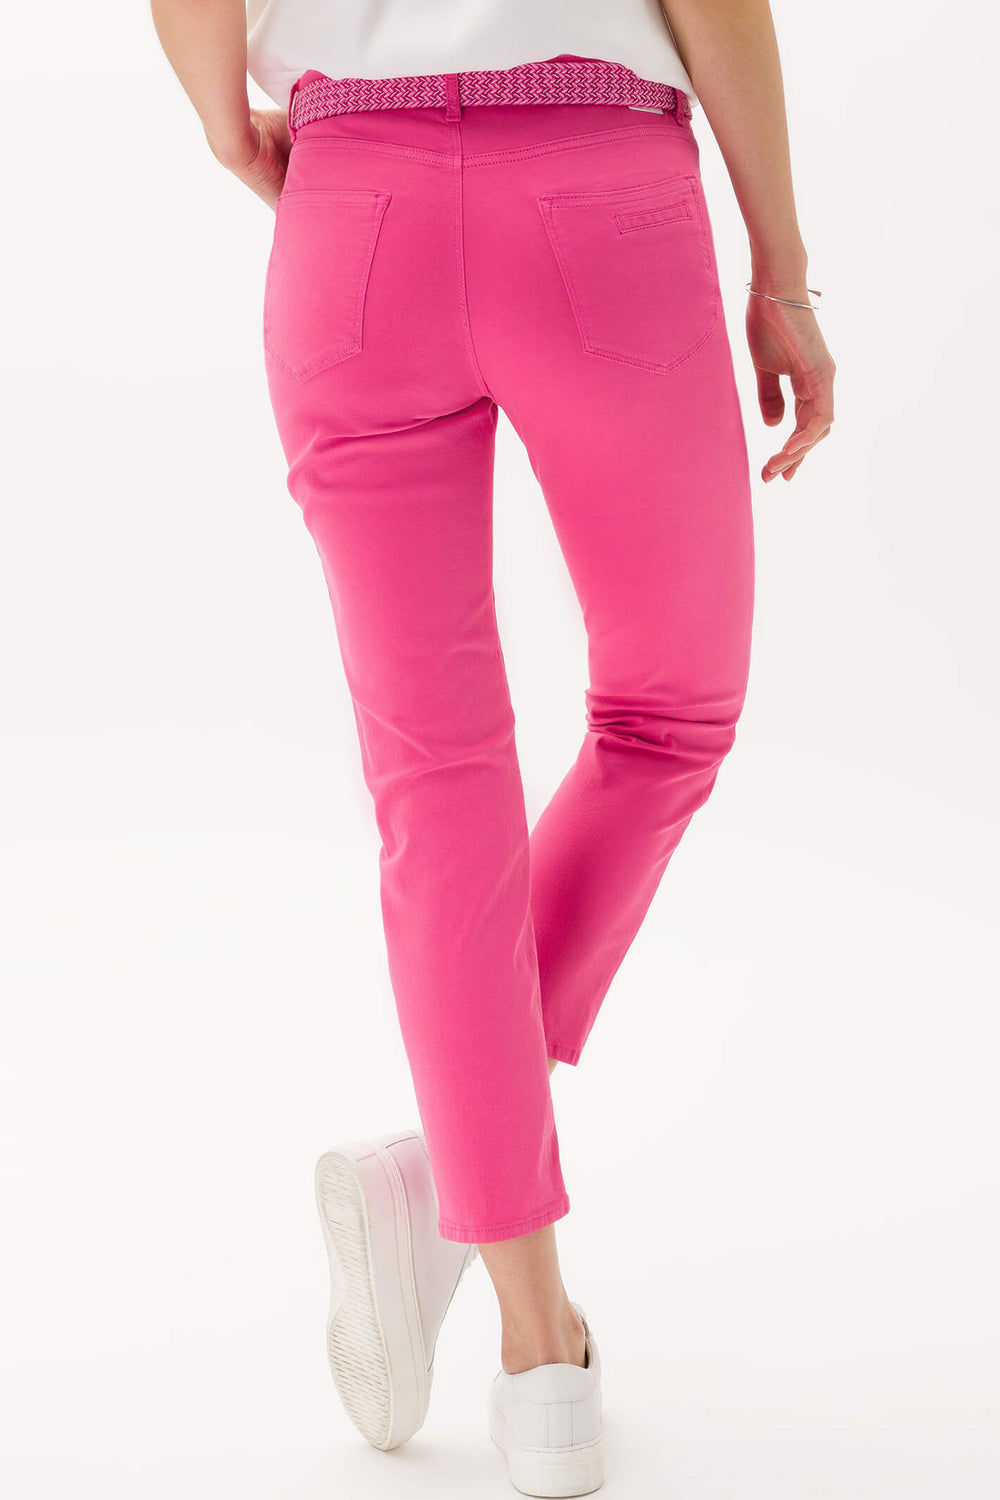 Brax Mary S 71-7558-85 Flush Pink Denim Jeans - Olivia Grace Fashion